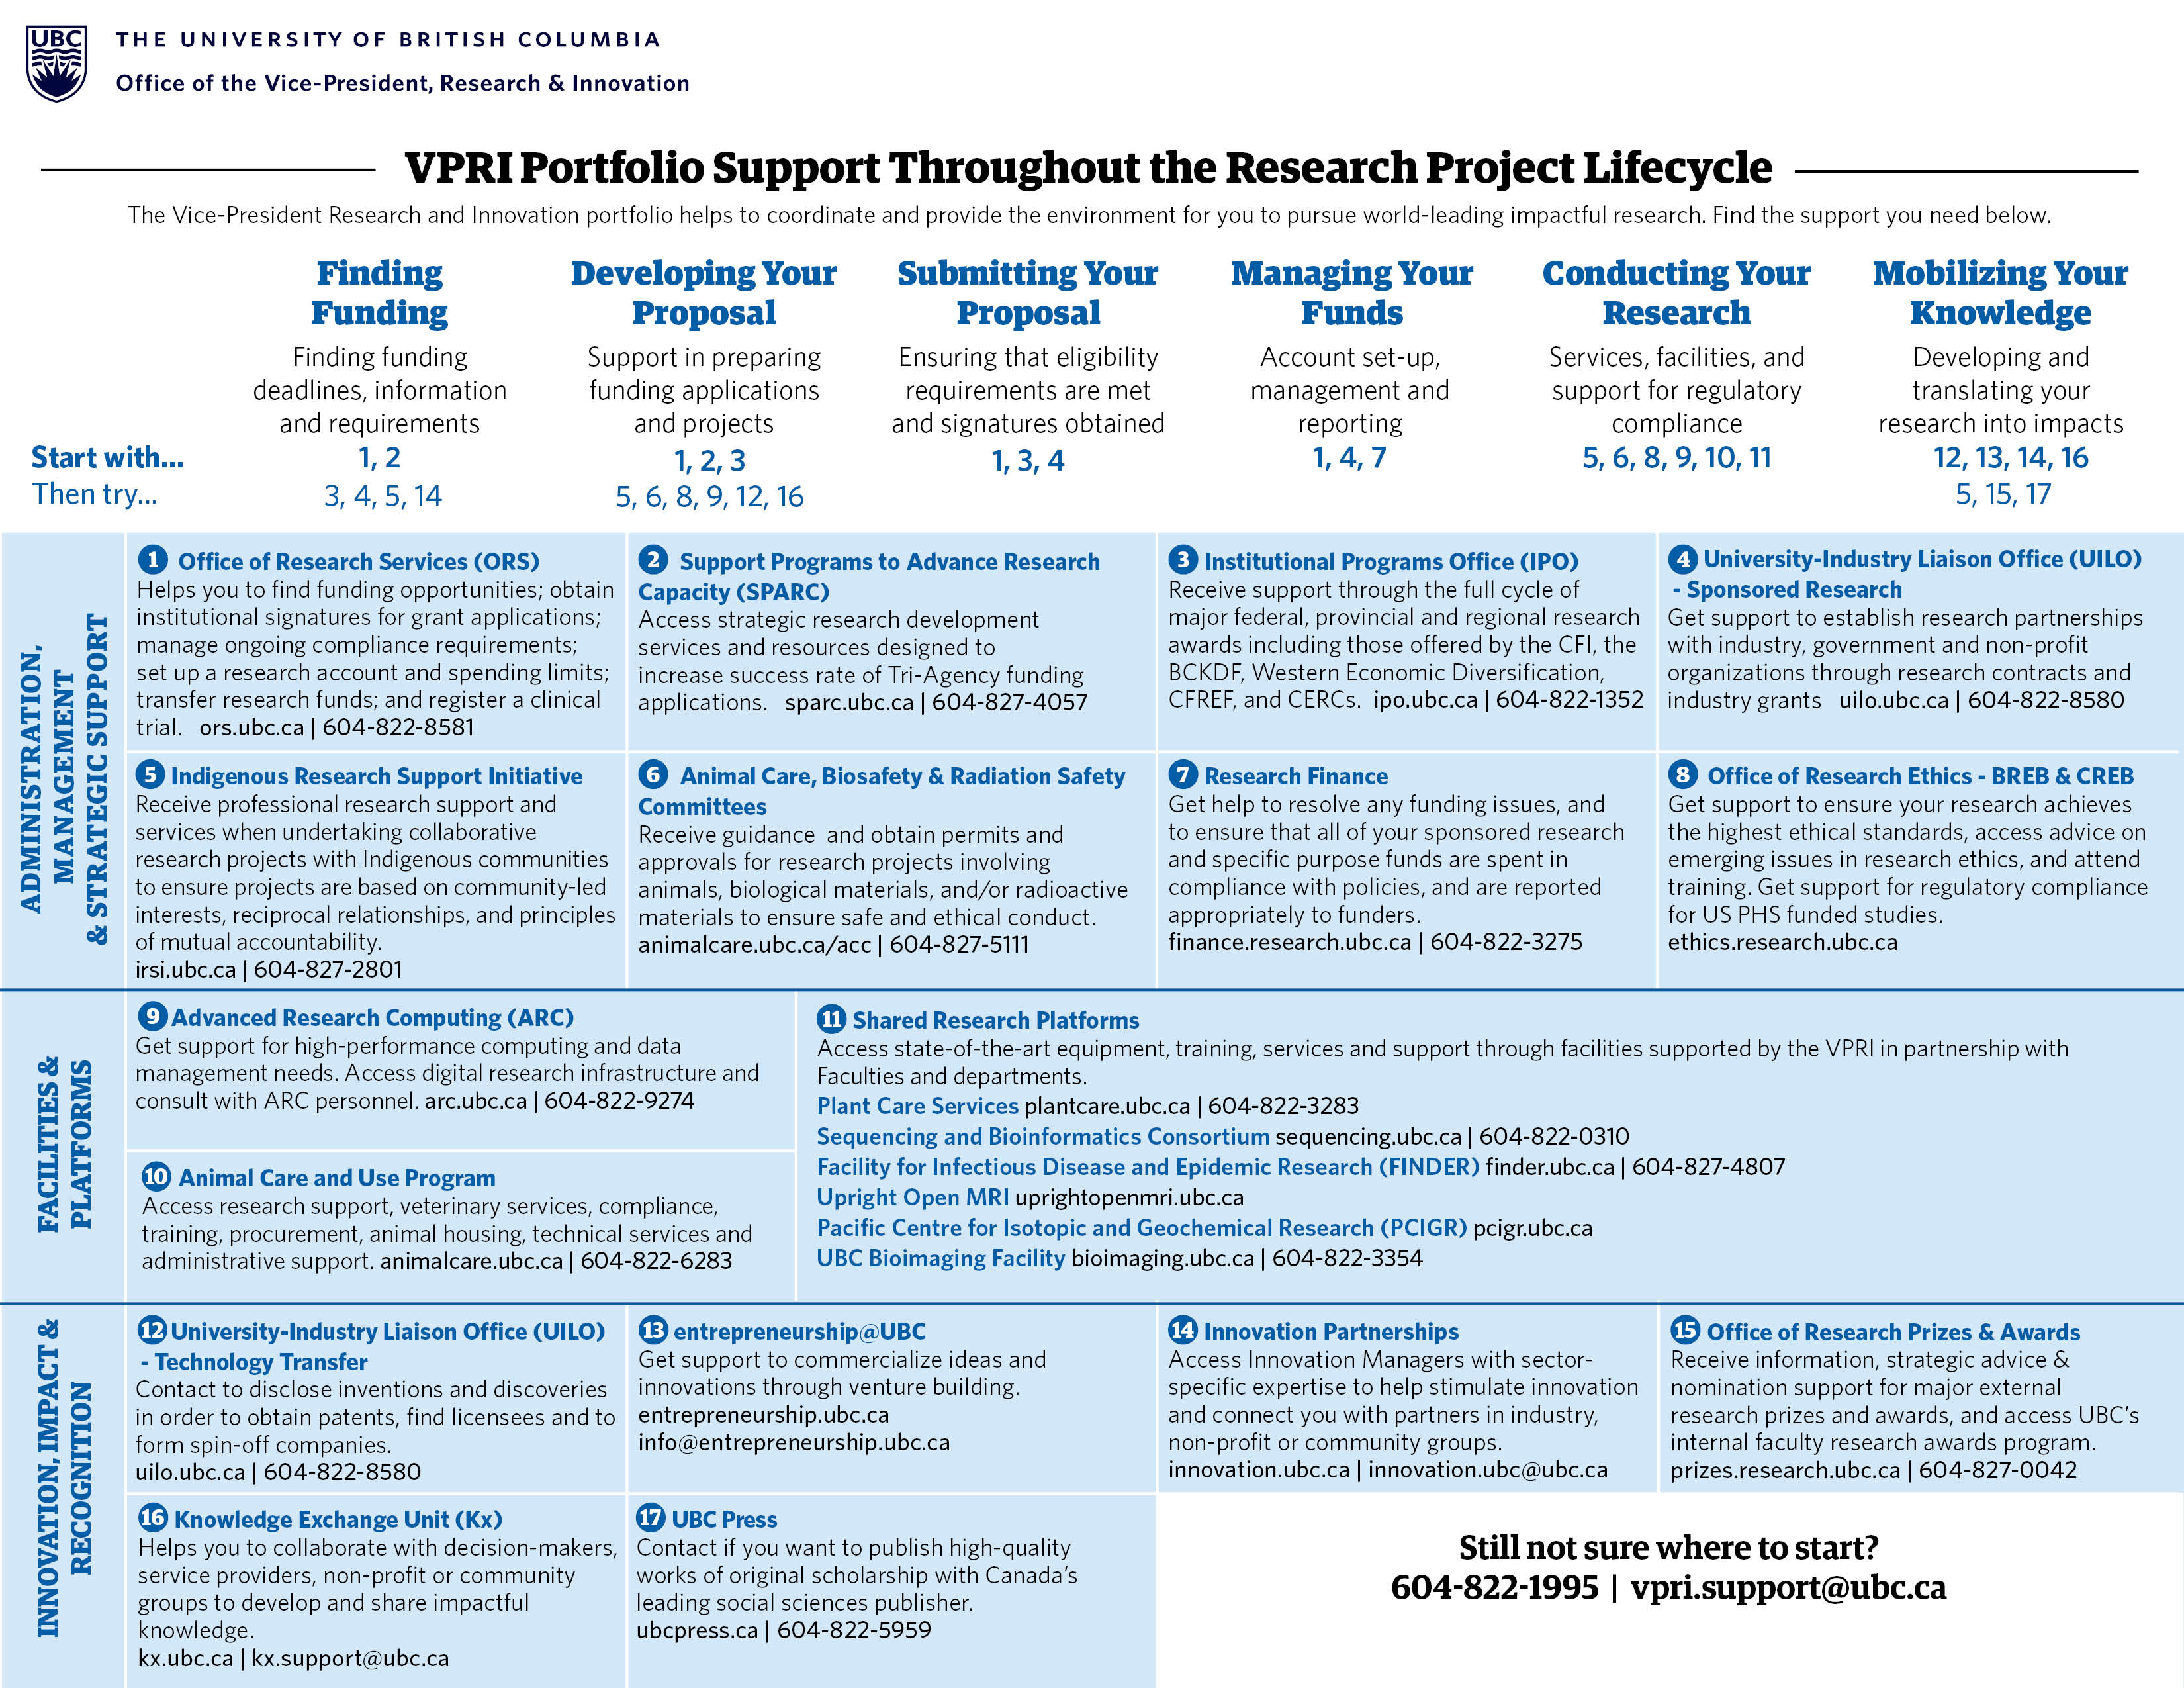 Handout listing all VPRI portfolio units - click to access PDF